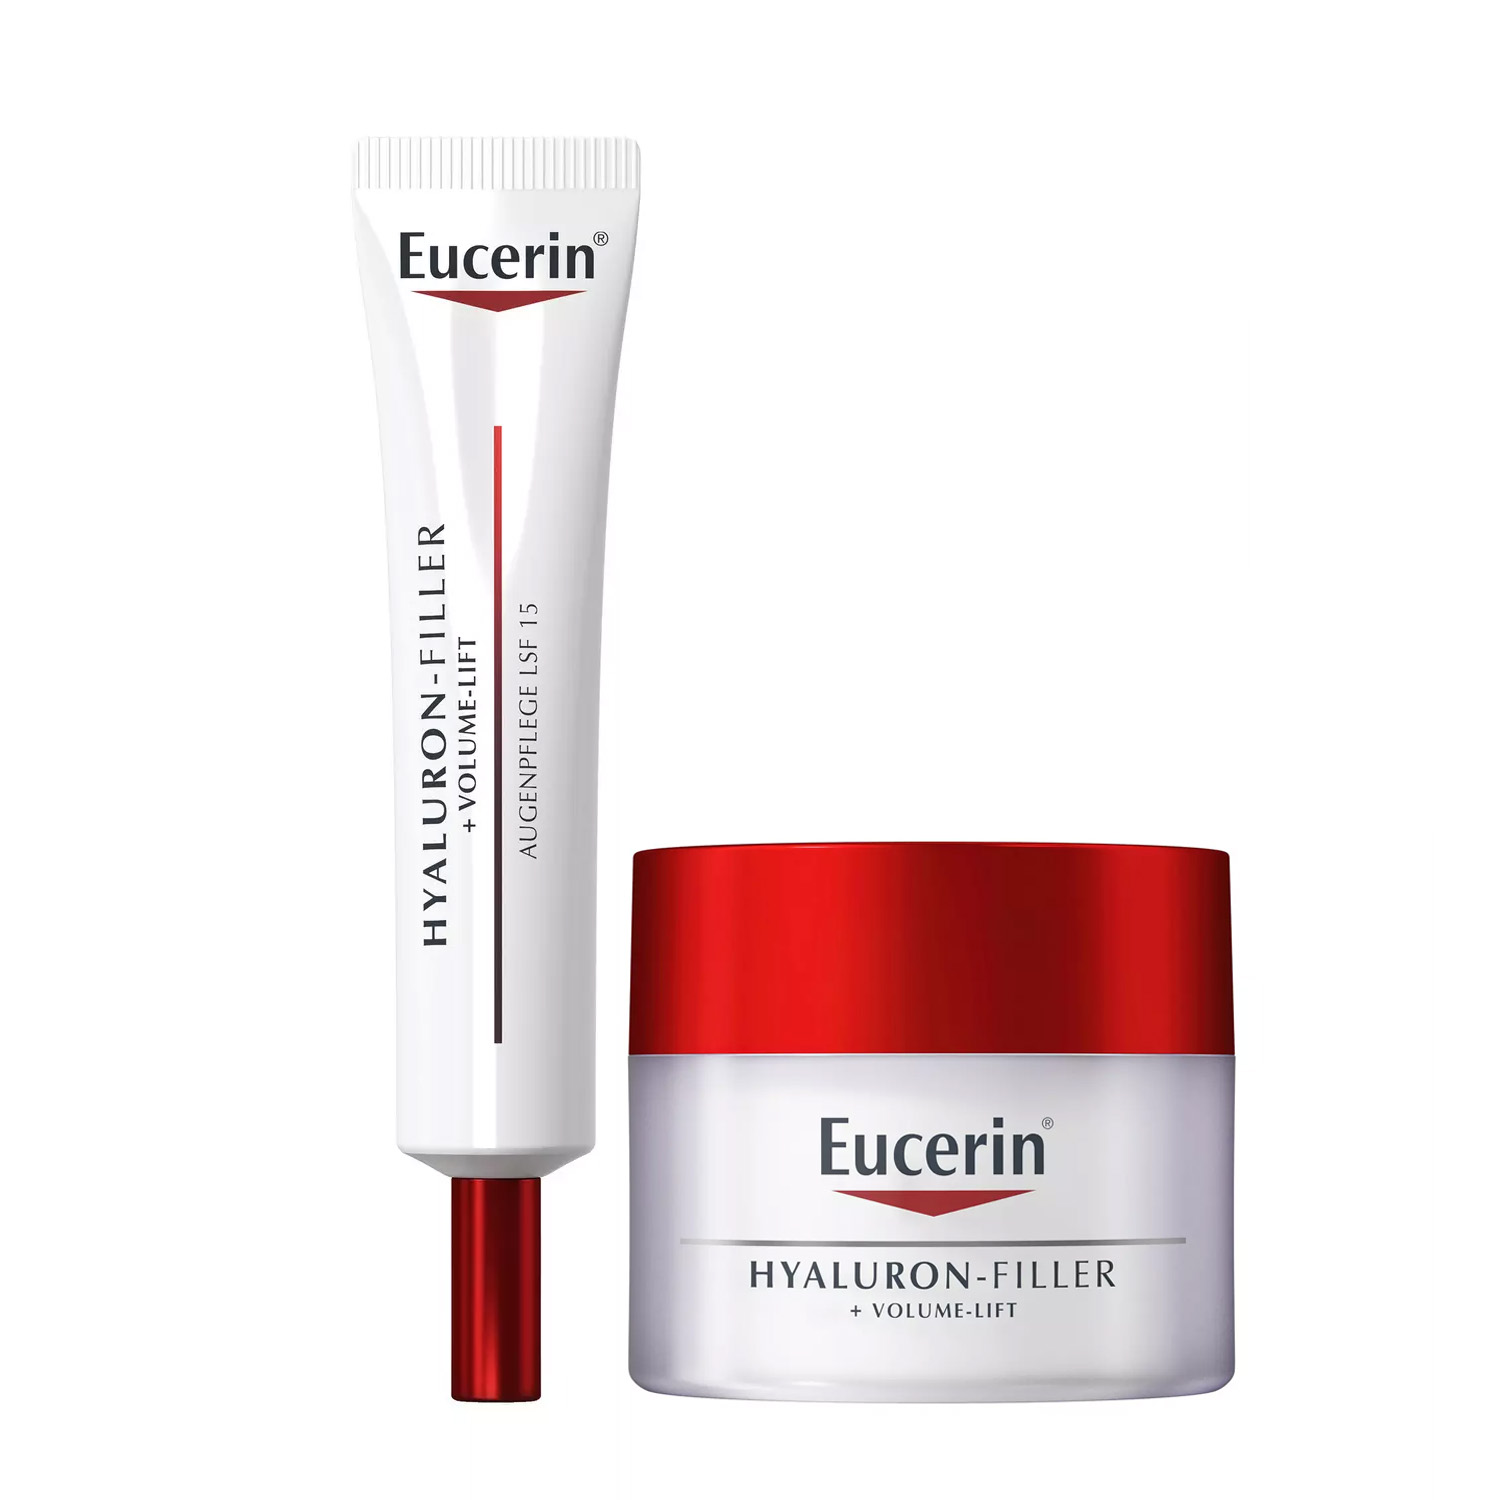 Eucerin Набор для нормальной кожи: крем для кожи вокруг глаз 15 мл + дневной крем 50 мл (Eucerin, Hyaluron-Filler + Volume-Lift) нежный увлажняющий крем hyaluron hydro active spf 15 beauty style 30 мл